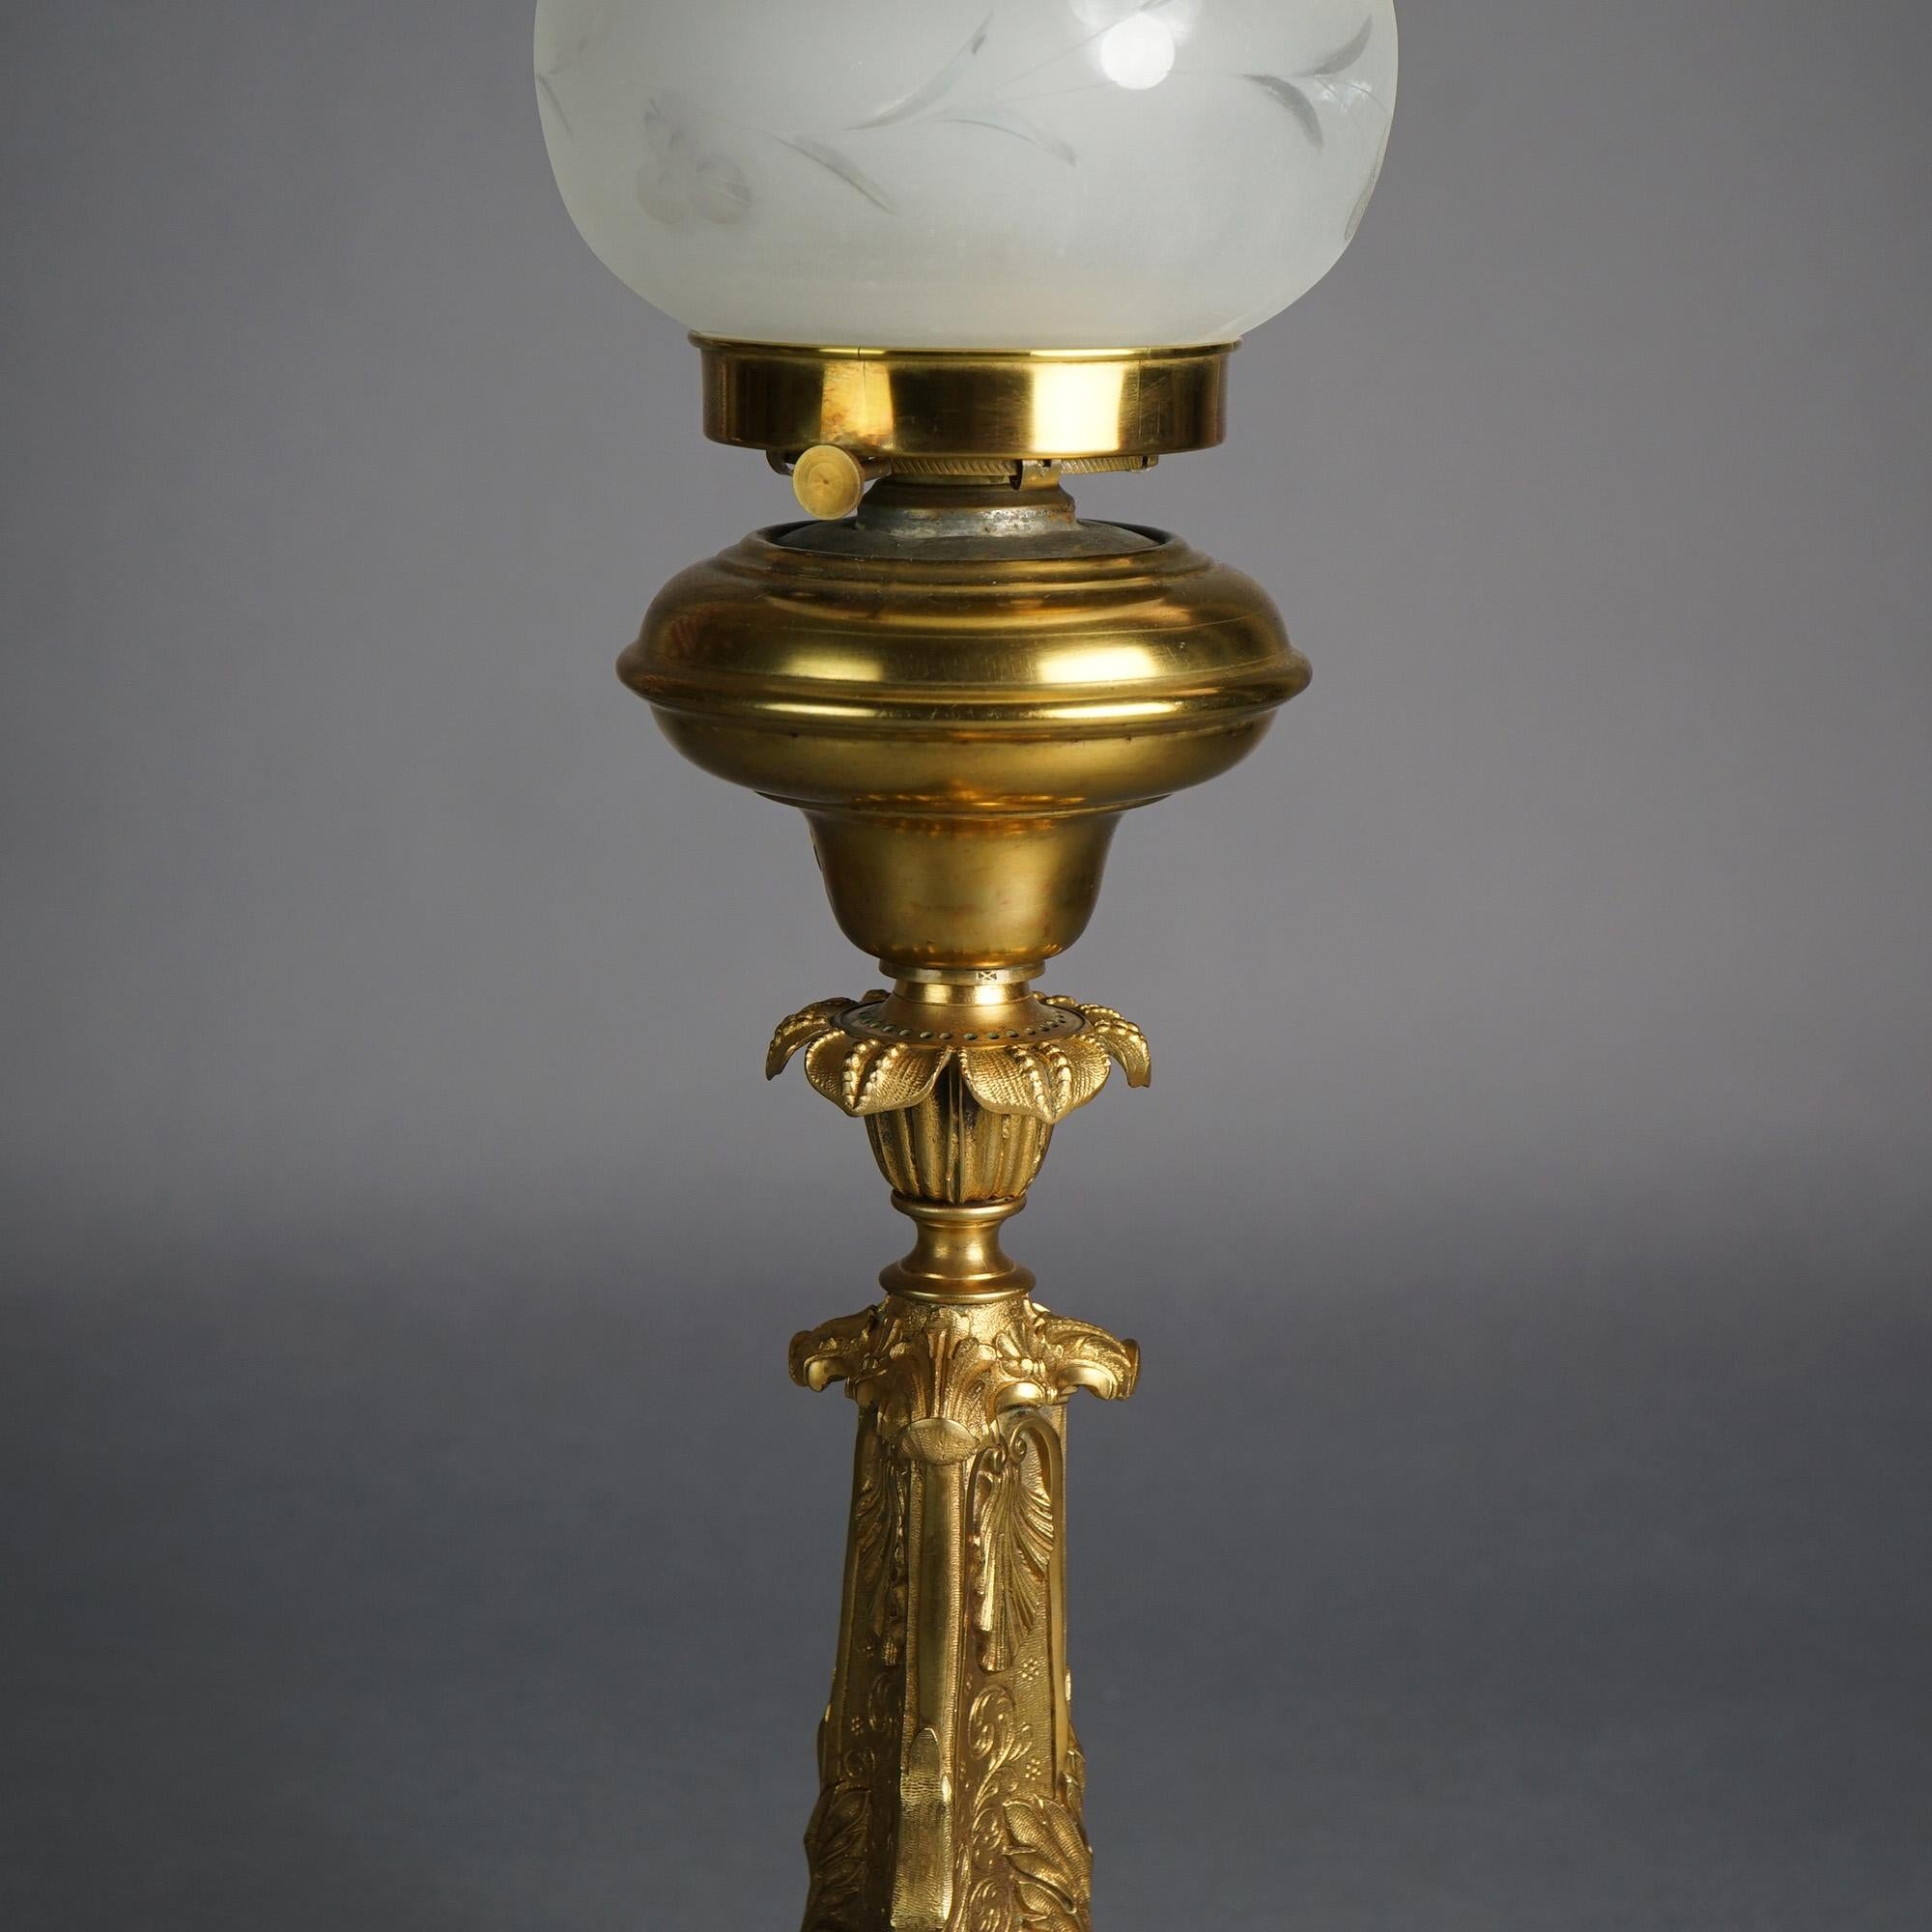 Antique Cornelius School Gilt Bronze Solar Lamp with Cut Glass Shade C1840 For Sale 7